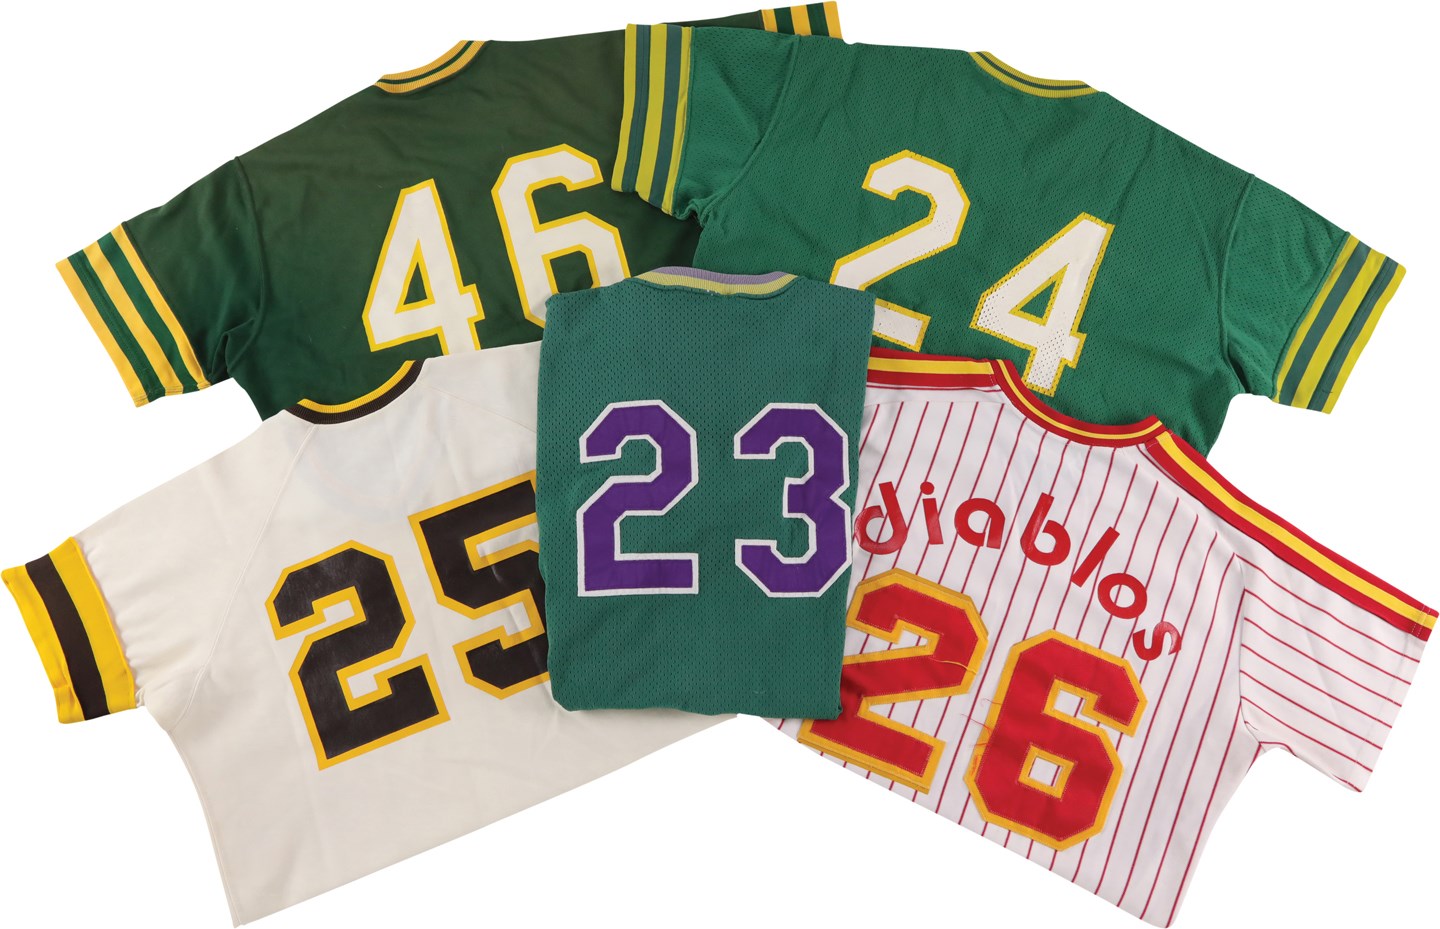 Baseball Equipment - Five Minor League Game Worn Jerseys Including El Paso Diablos and Augusta Green Jackets